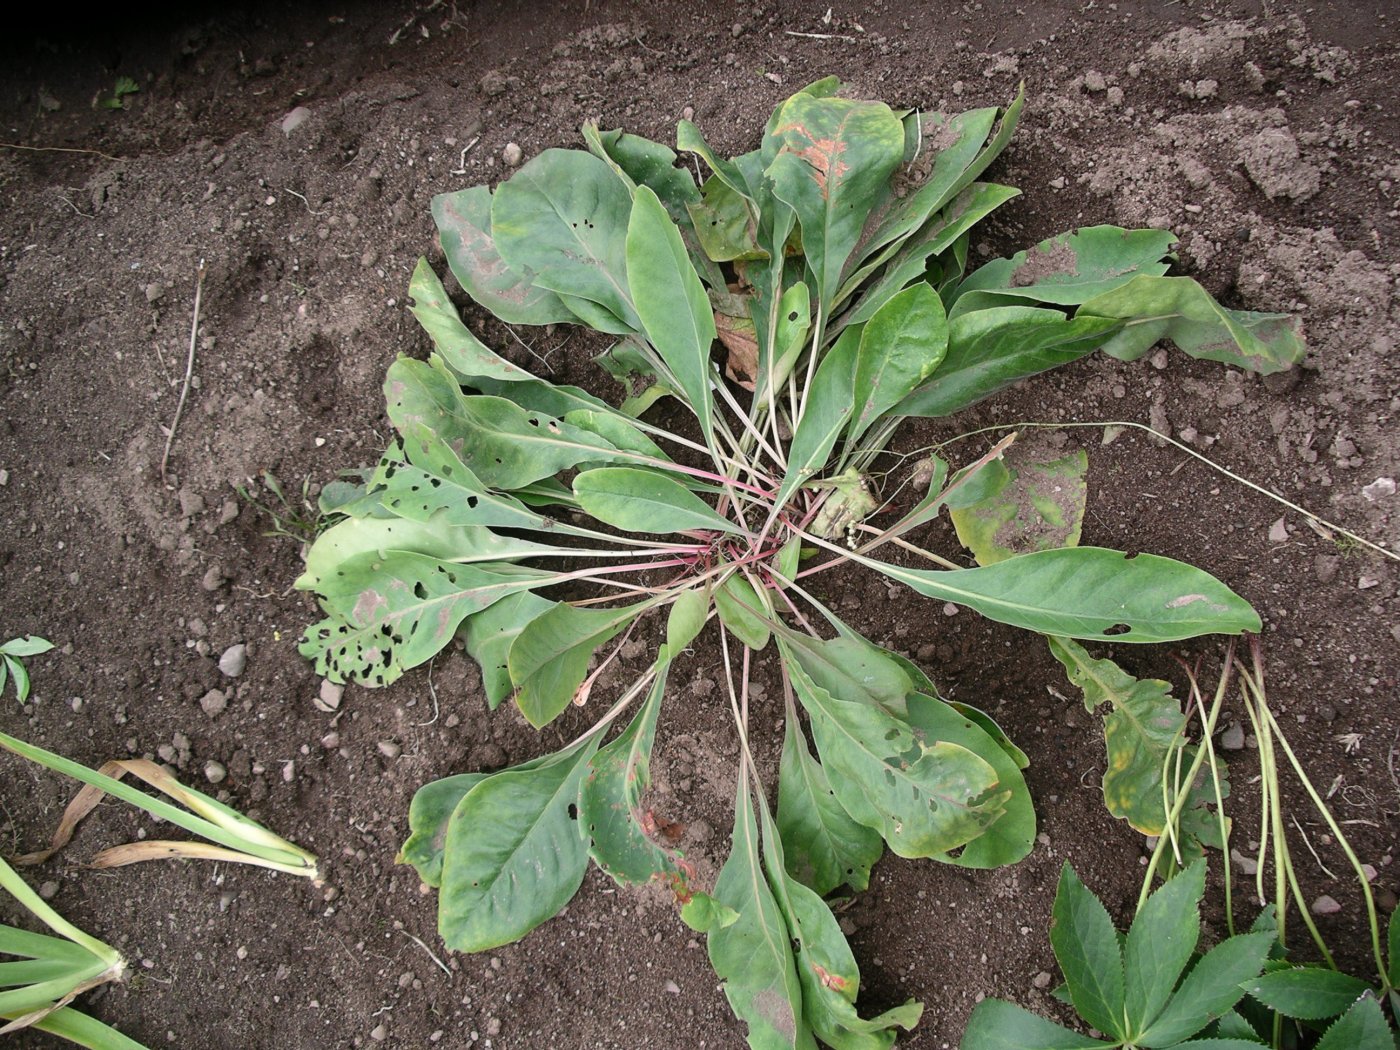 Limonium gmelinii (Willd.) O. Kuntze